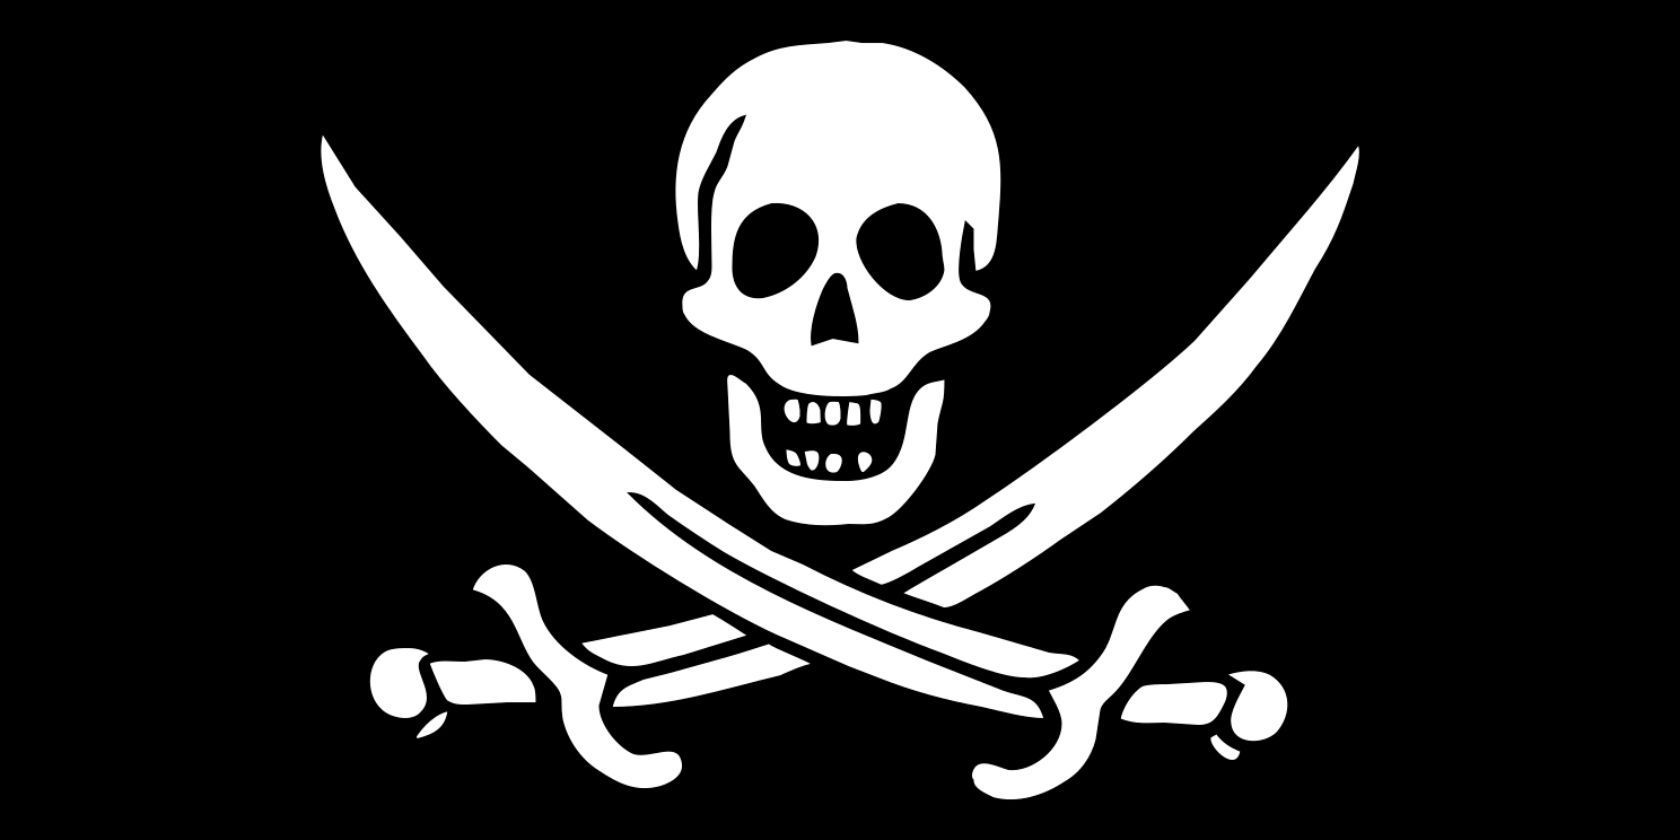 The Pirate Symbol